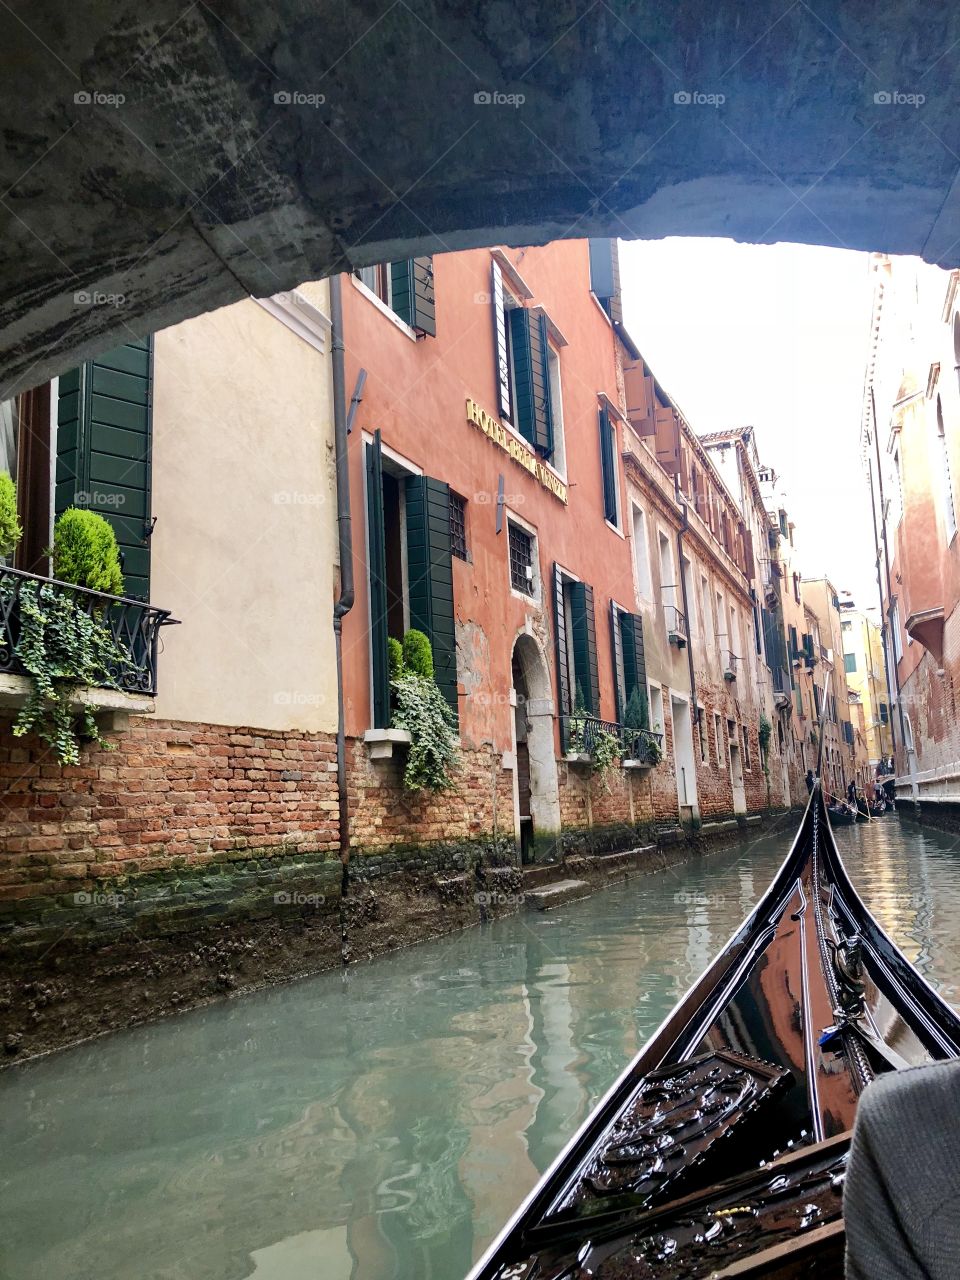 Gondola going under a bridge - Venice, Italy